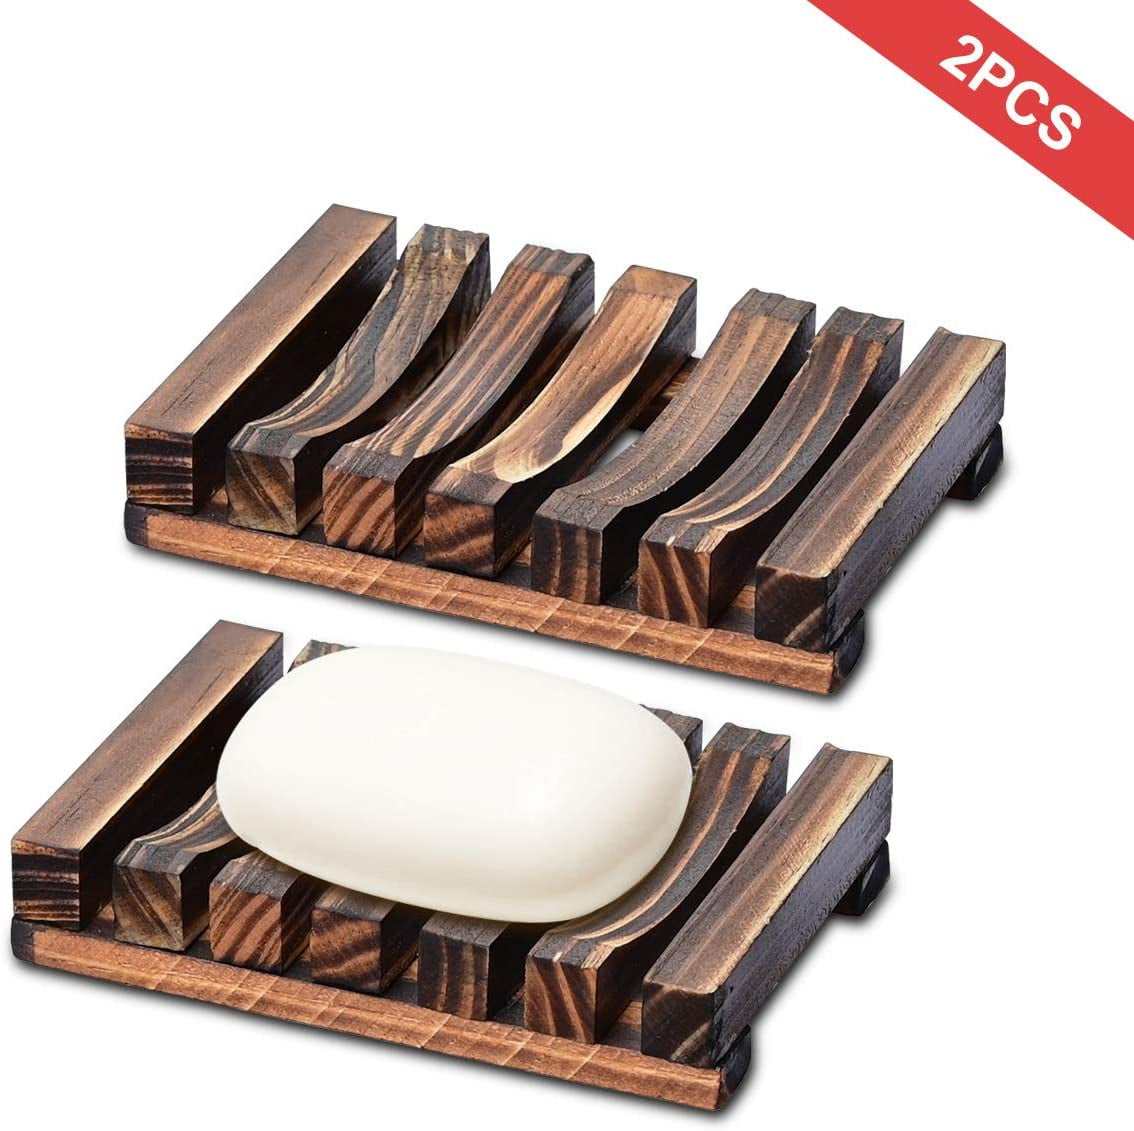 Wooden Soap Holder, Self-adhesive Magnetic Wood Bar Soap Dish